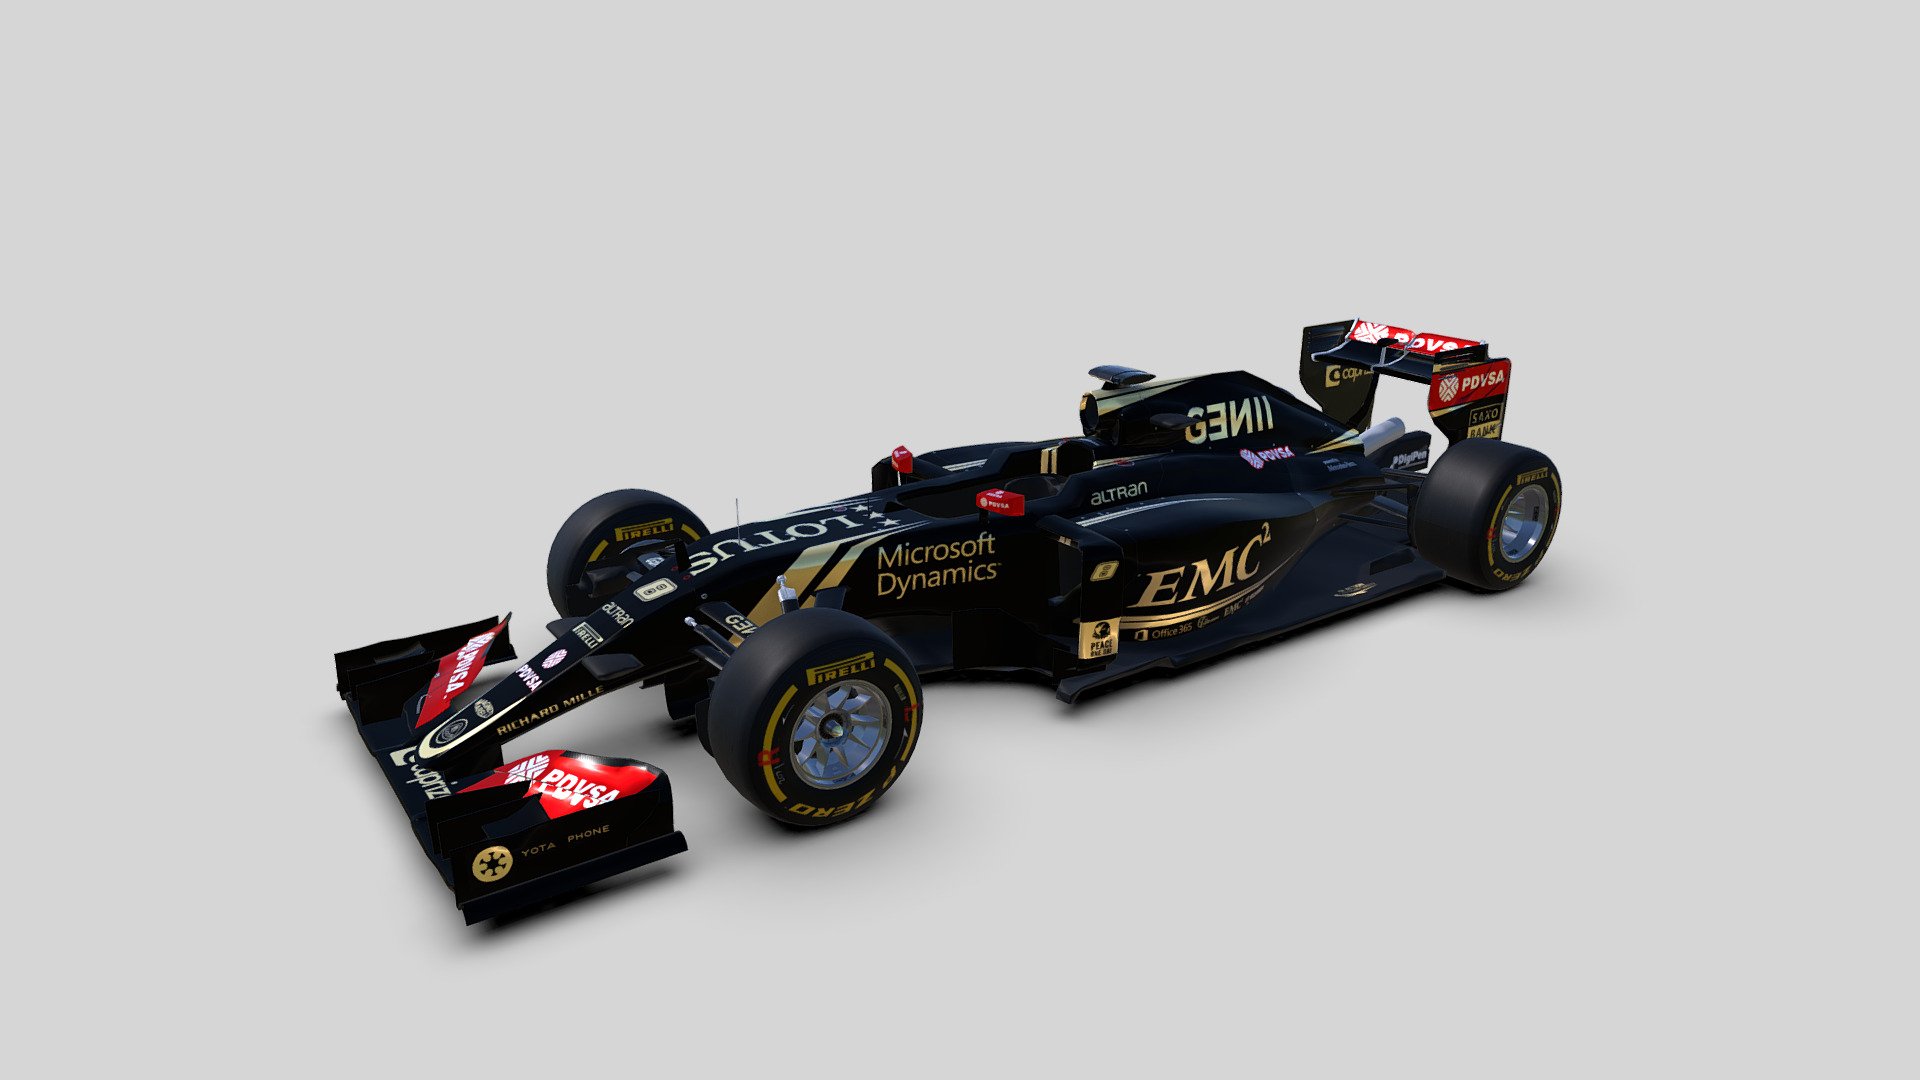 Lotus F1 E23 Hybrid, 3D model  - Lotus F1 E23 Hybrid - 3D model by Excalibur 3d model